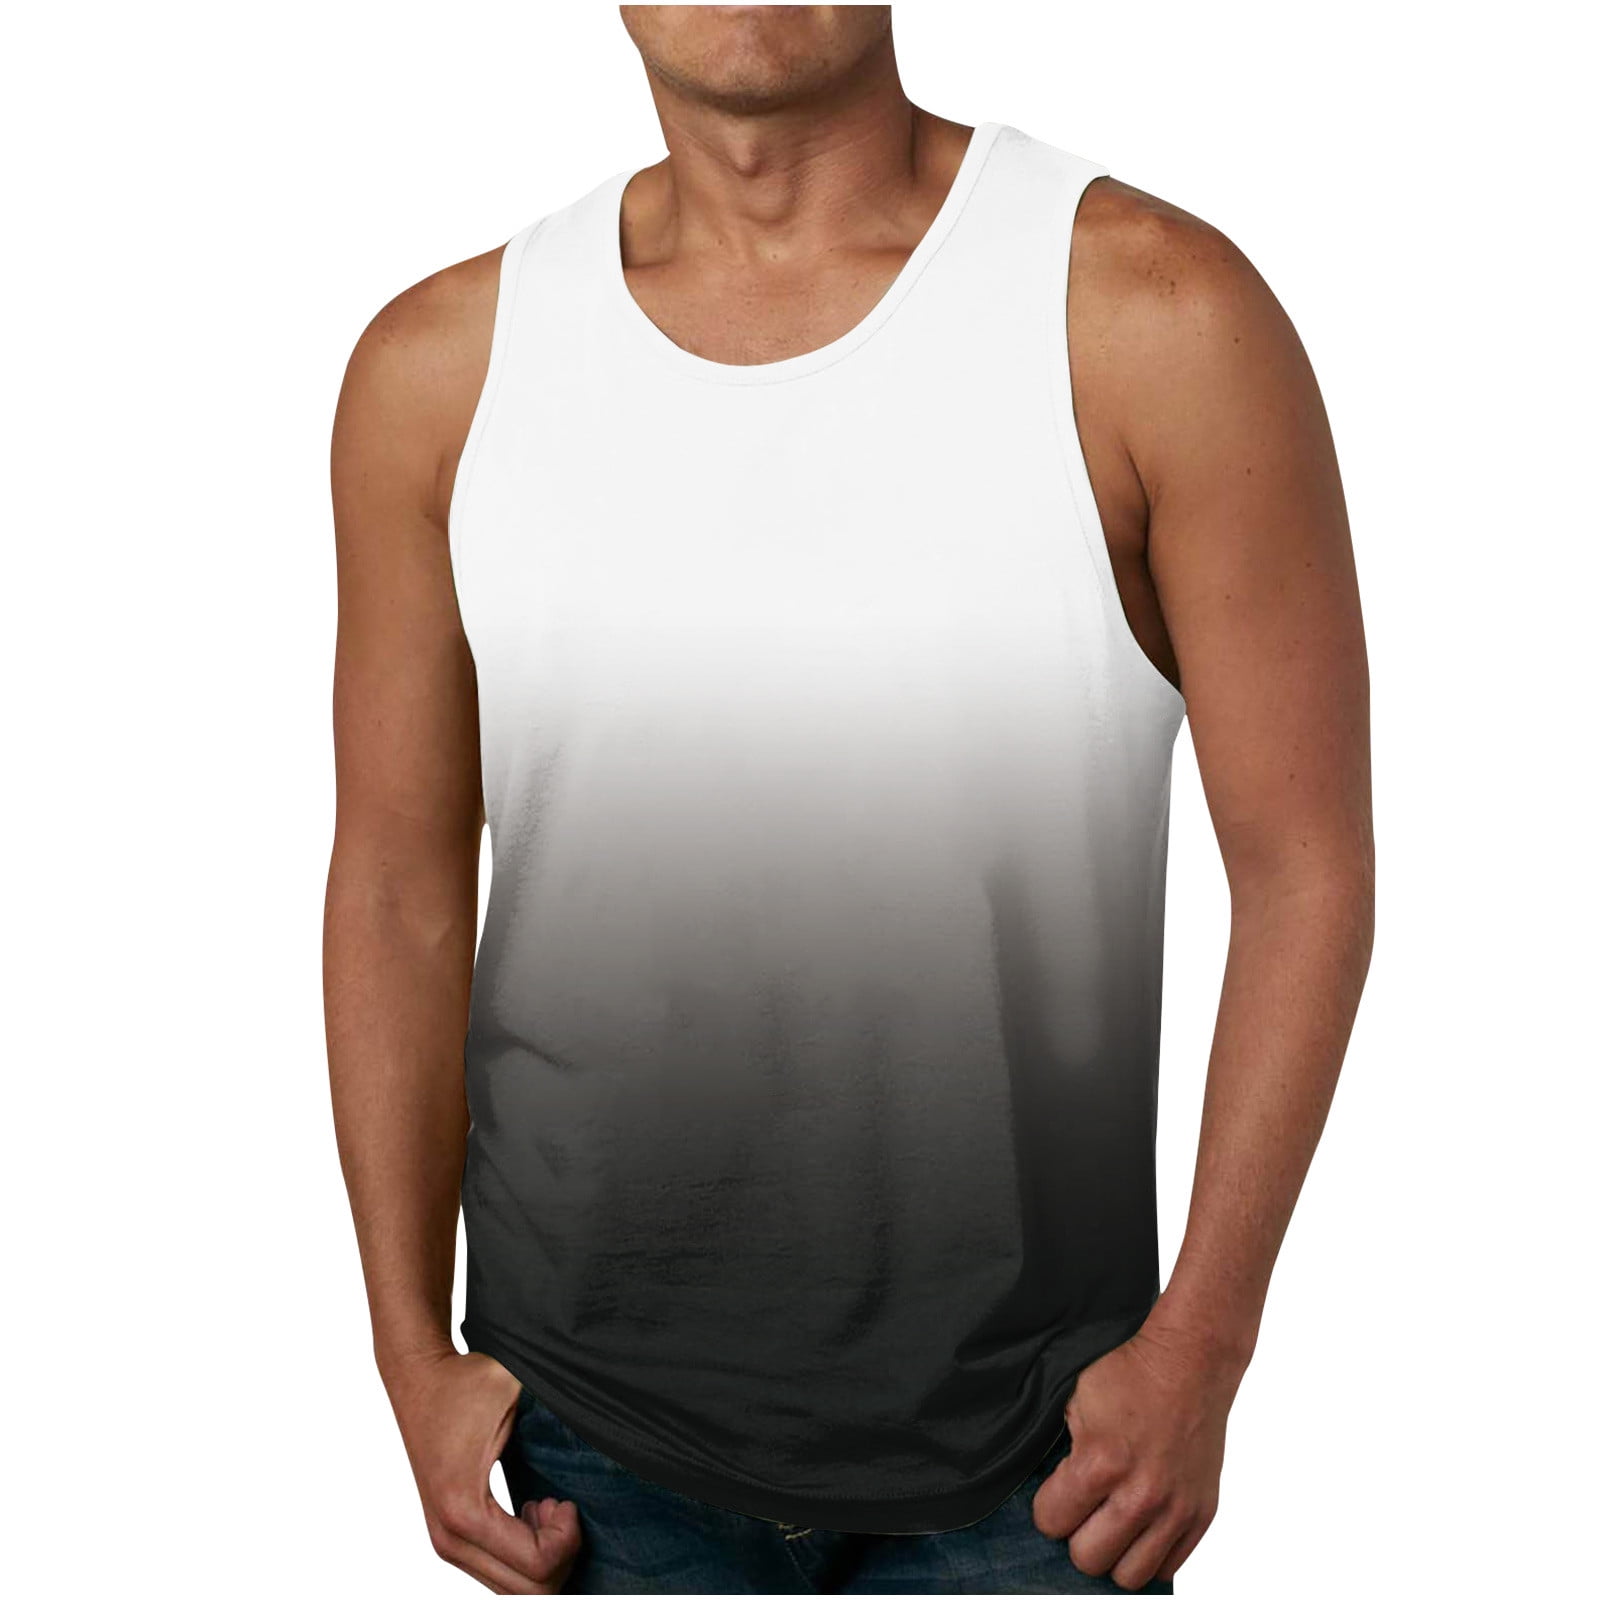 COSFO Cotton imitation Habit Shirts For Men Crew Neck Sleeveless